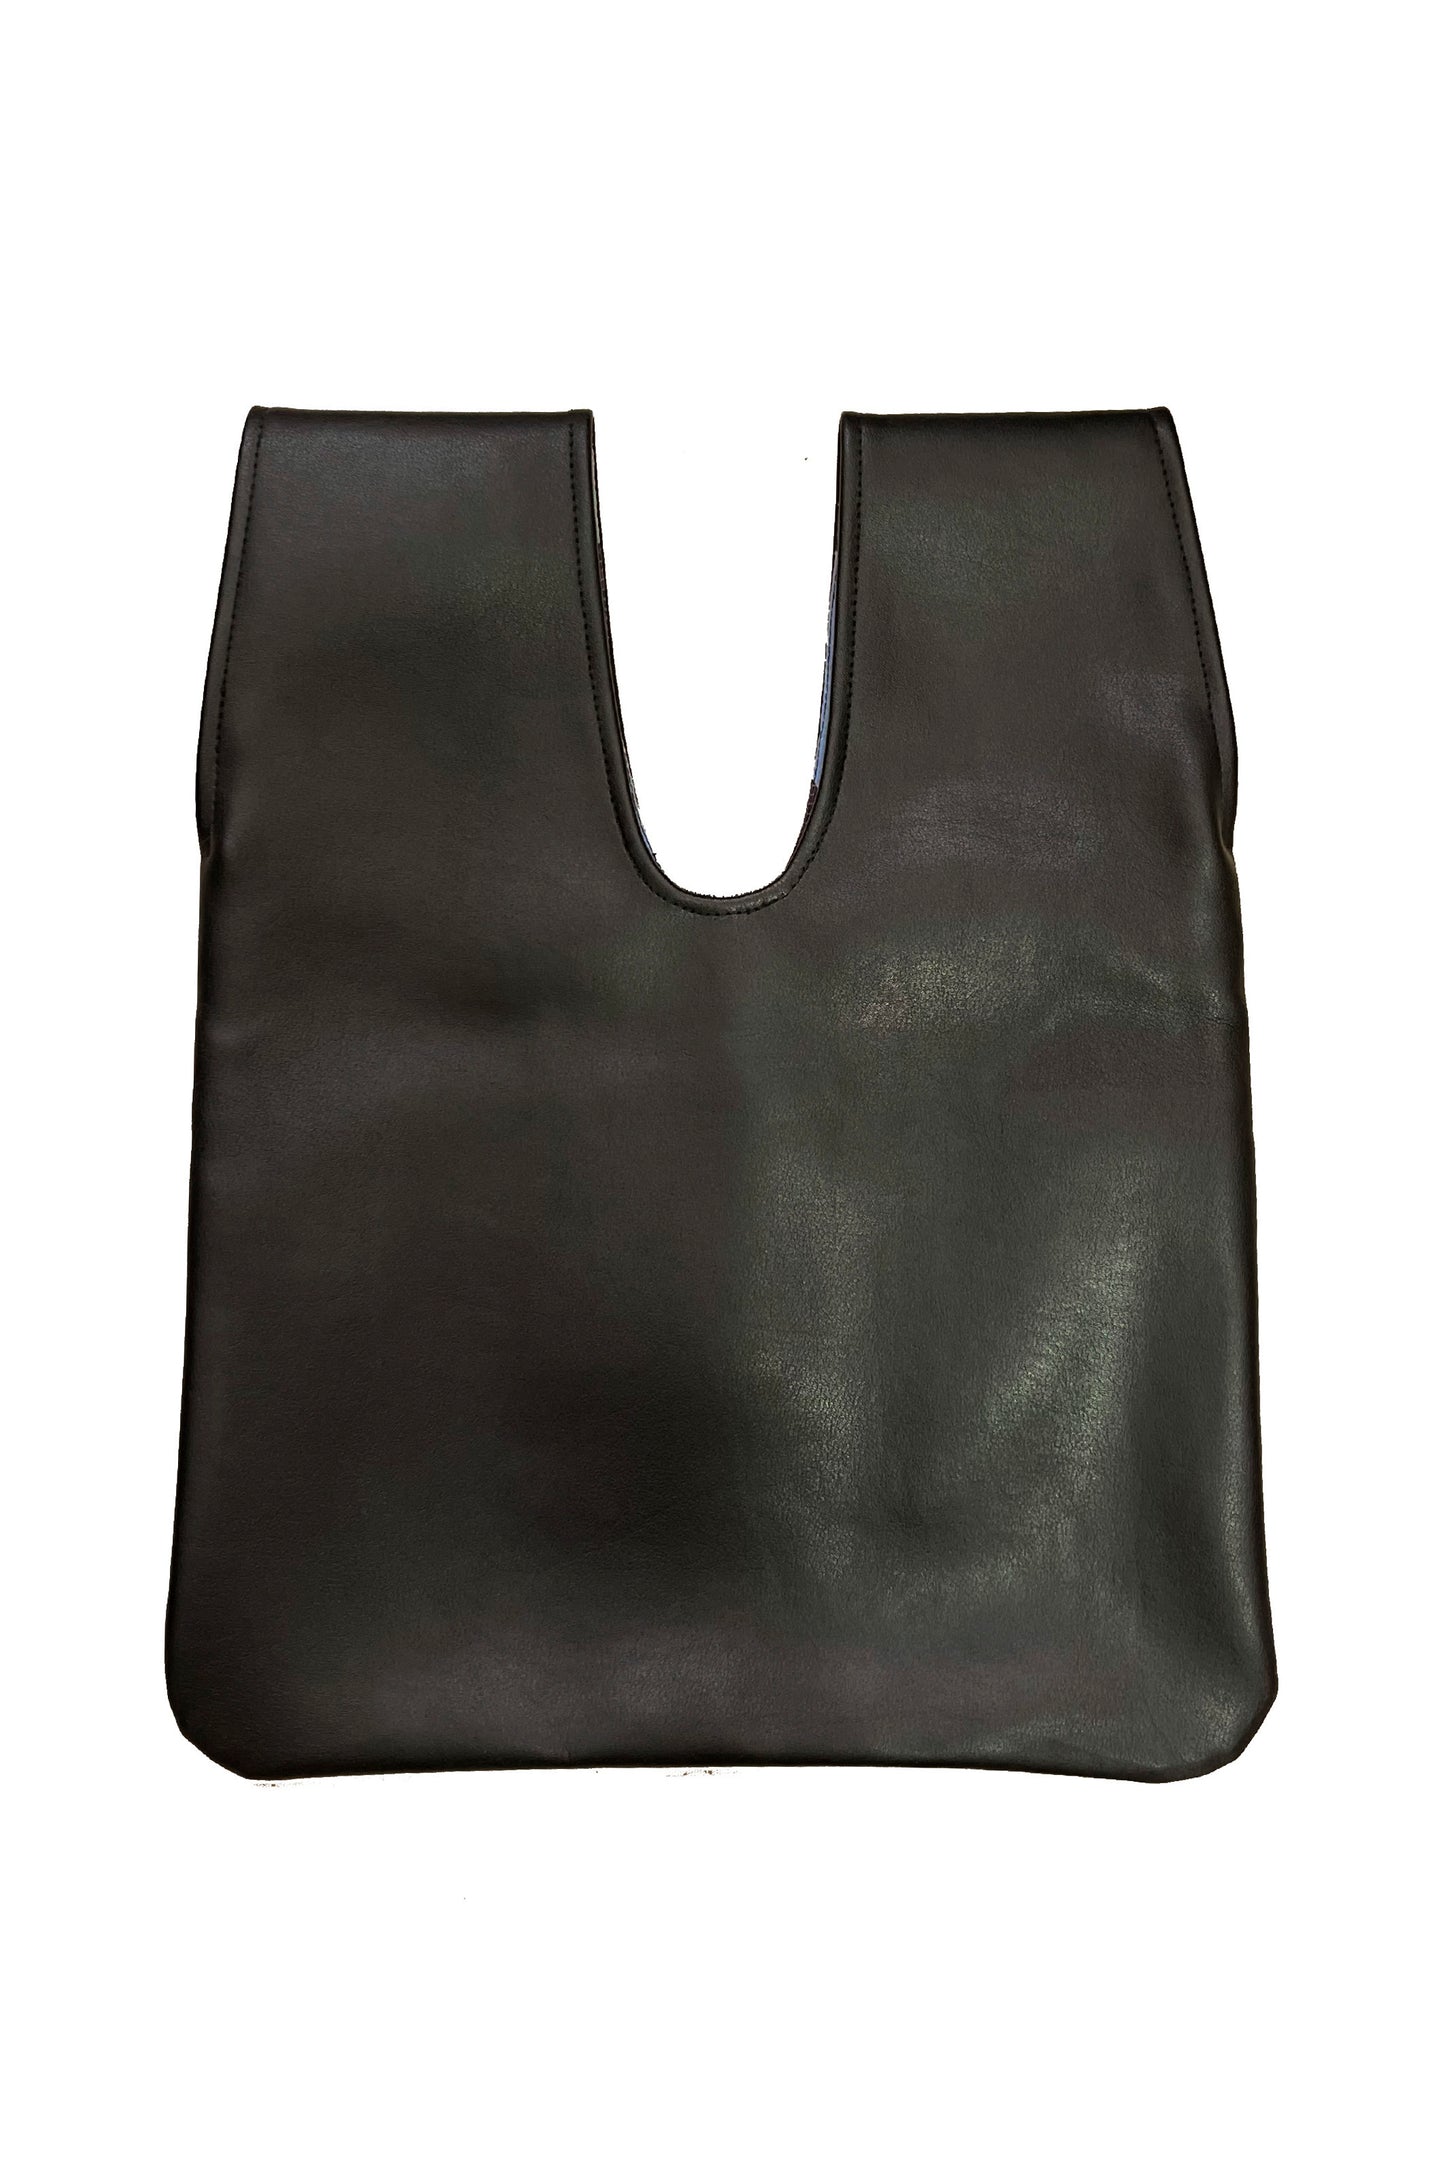 Cactus leather bag